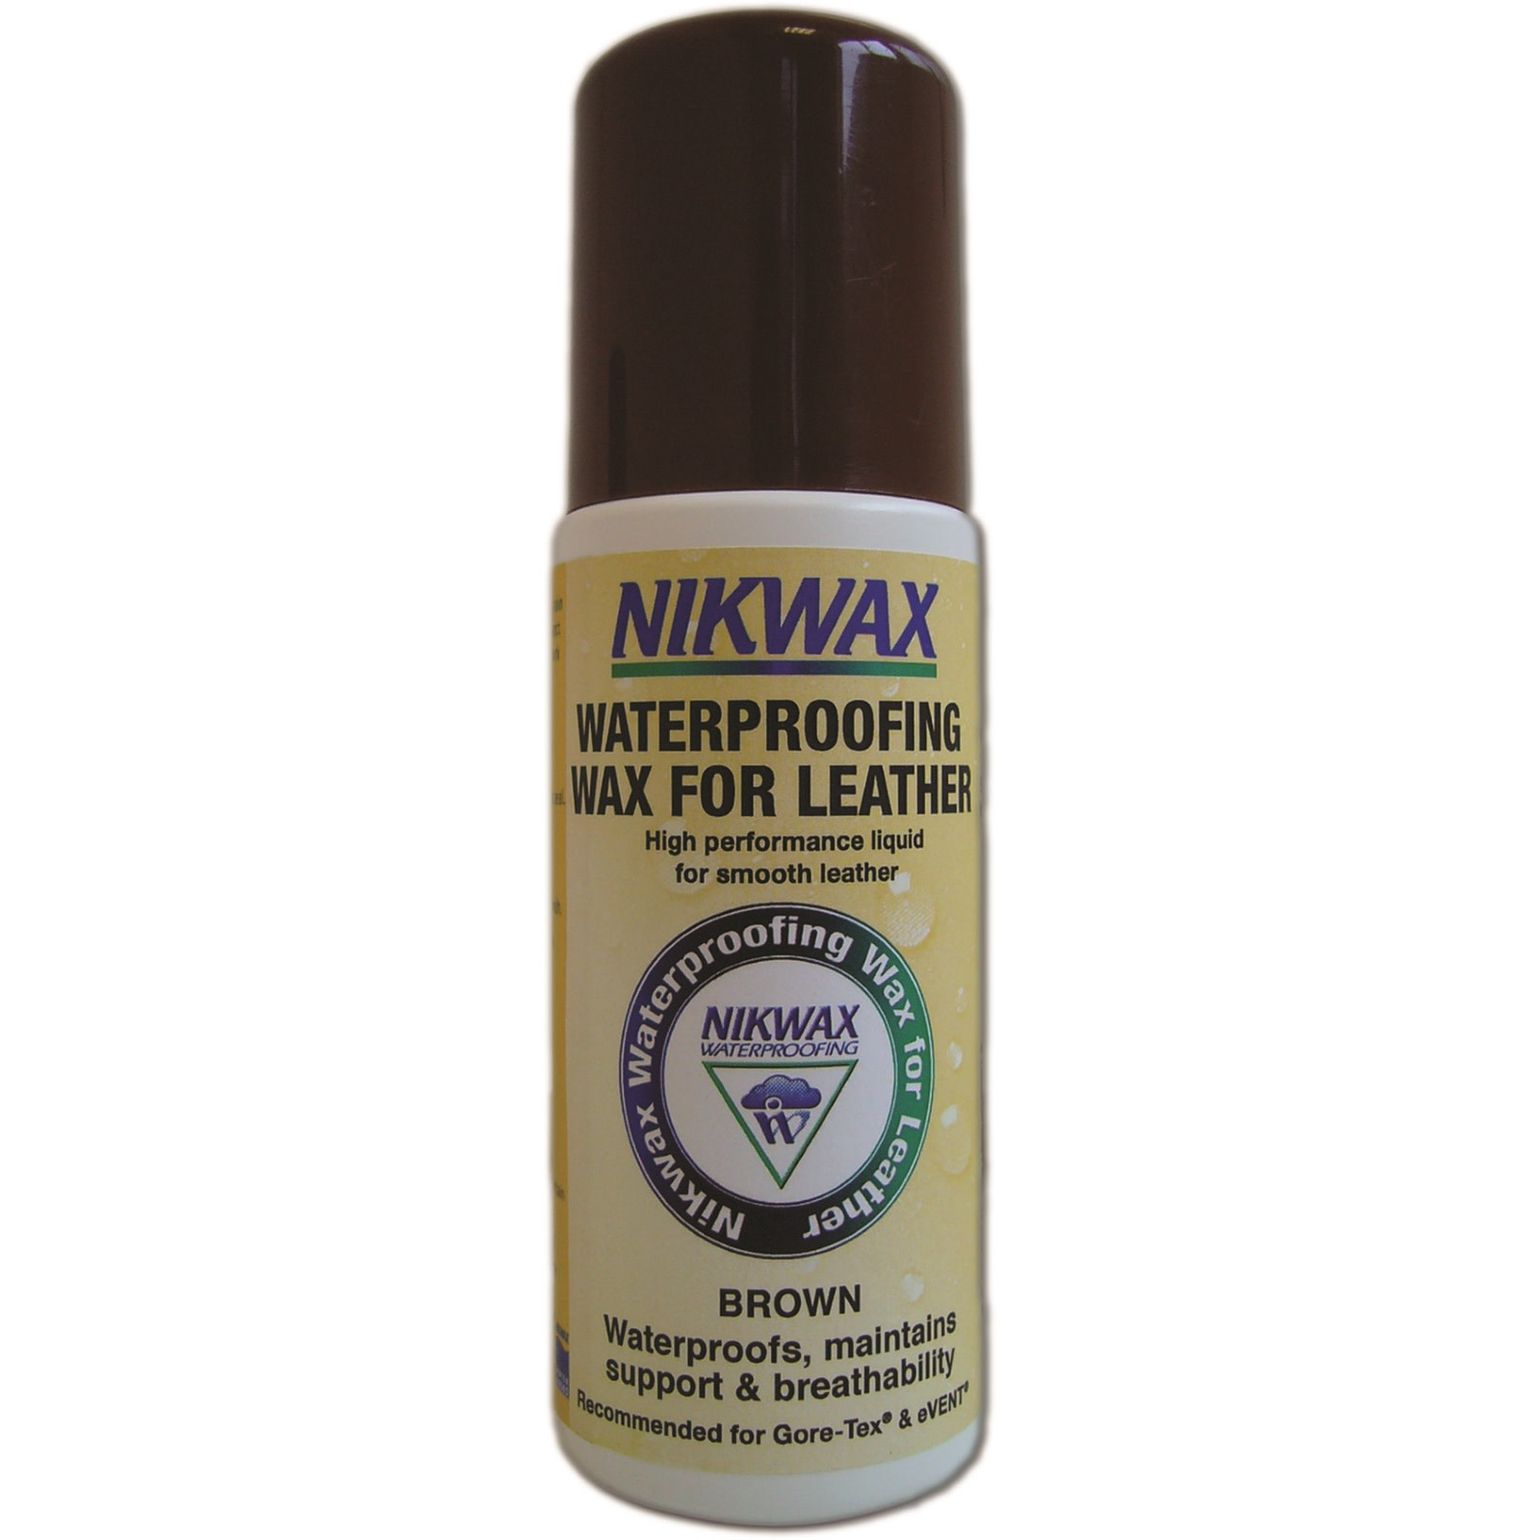 Nikwax Waterproofing Wax for Leather Brown